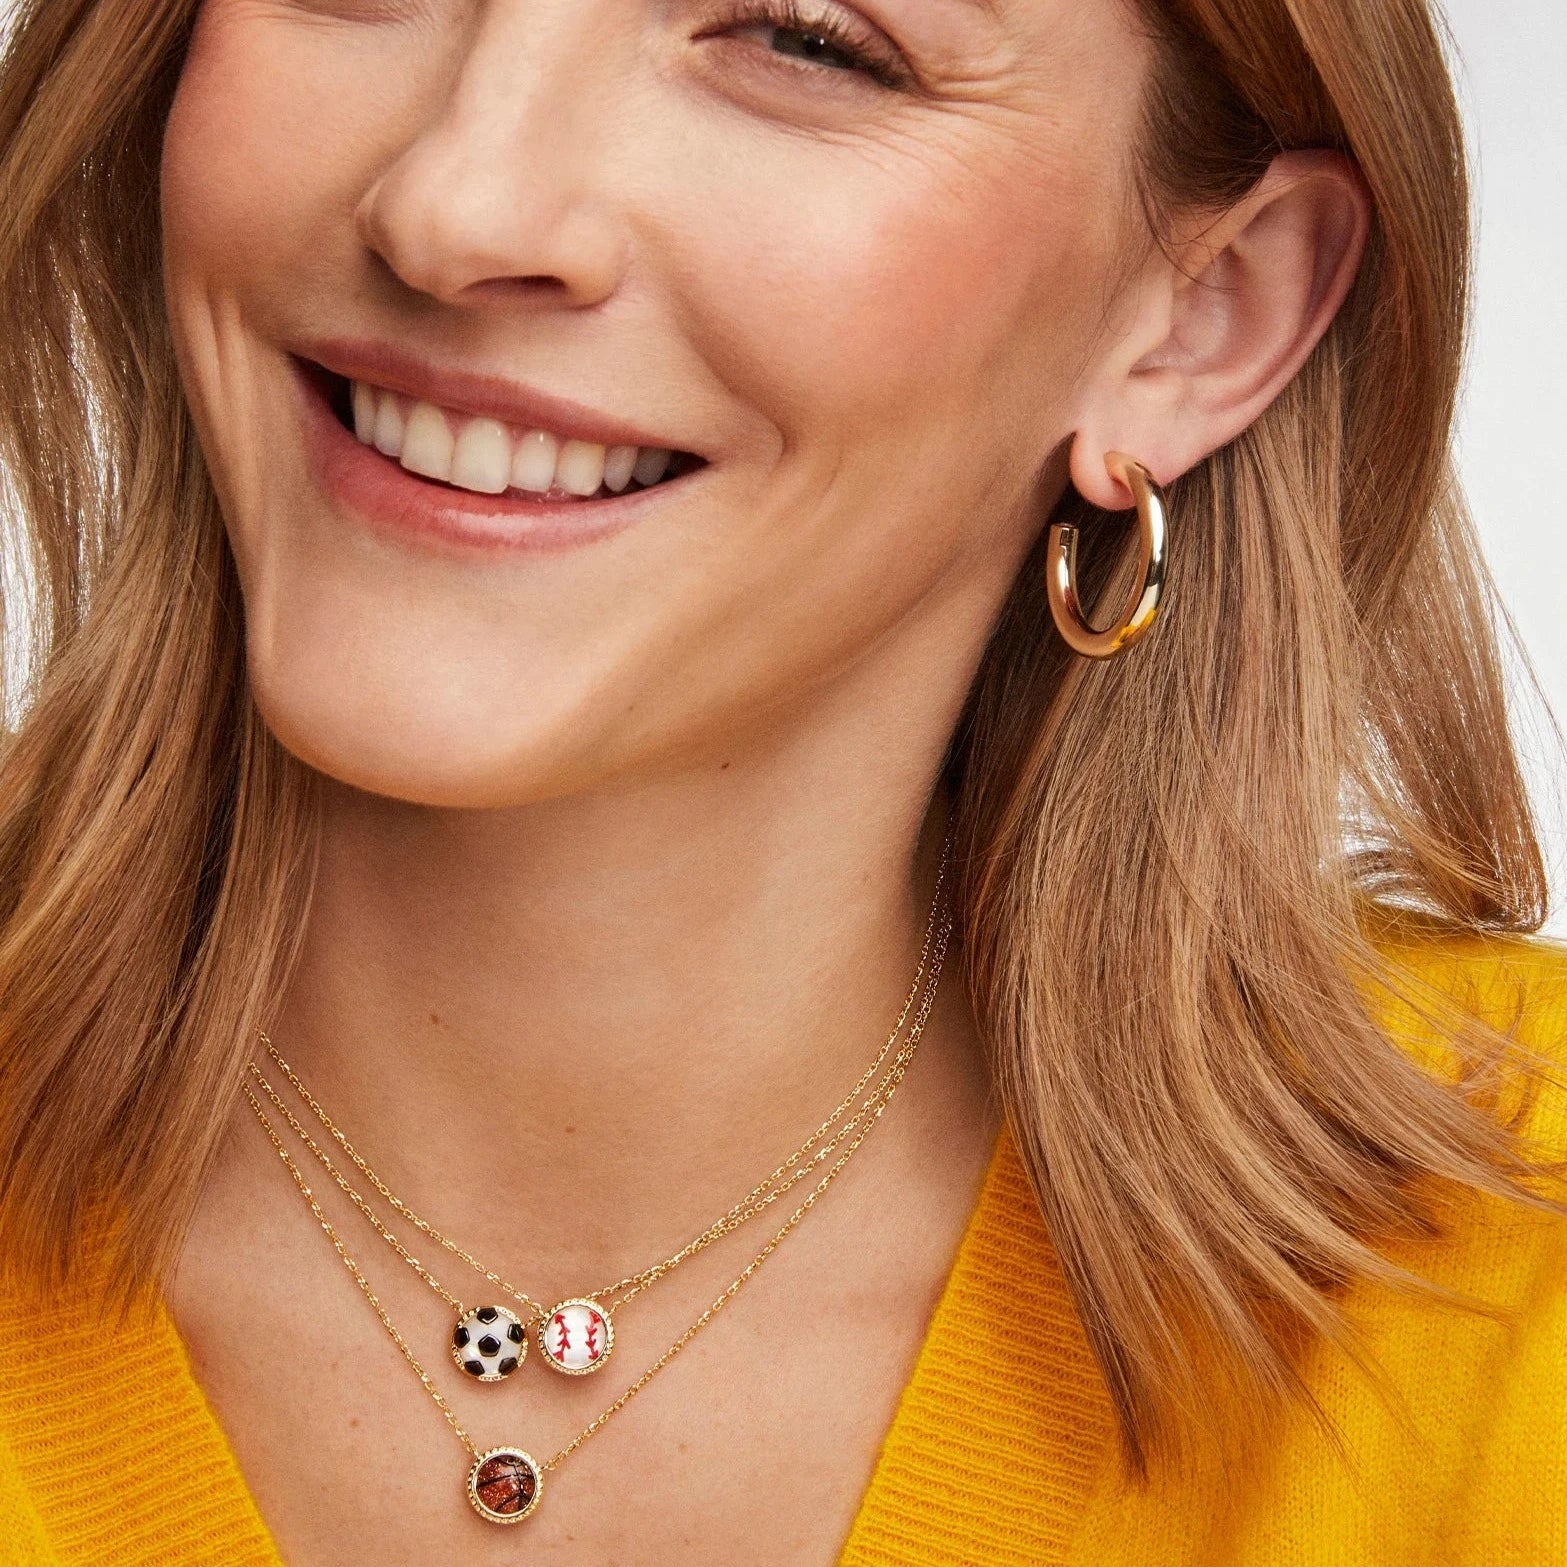 Kendra Scott | Basketball Gold Short Pendant Necklace in Orange Goldstone - Giddy Up Glamour Boutique